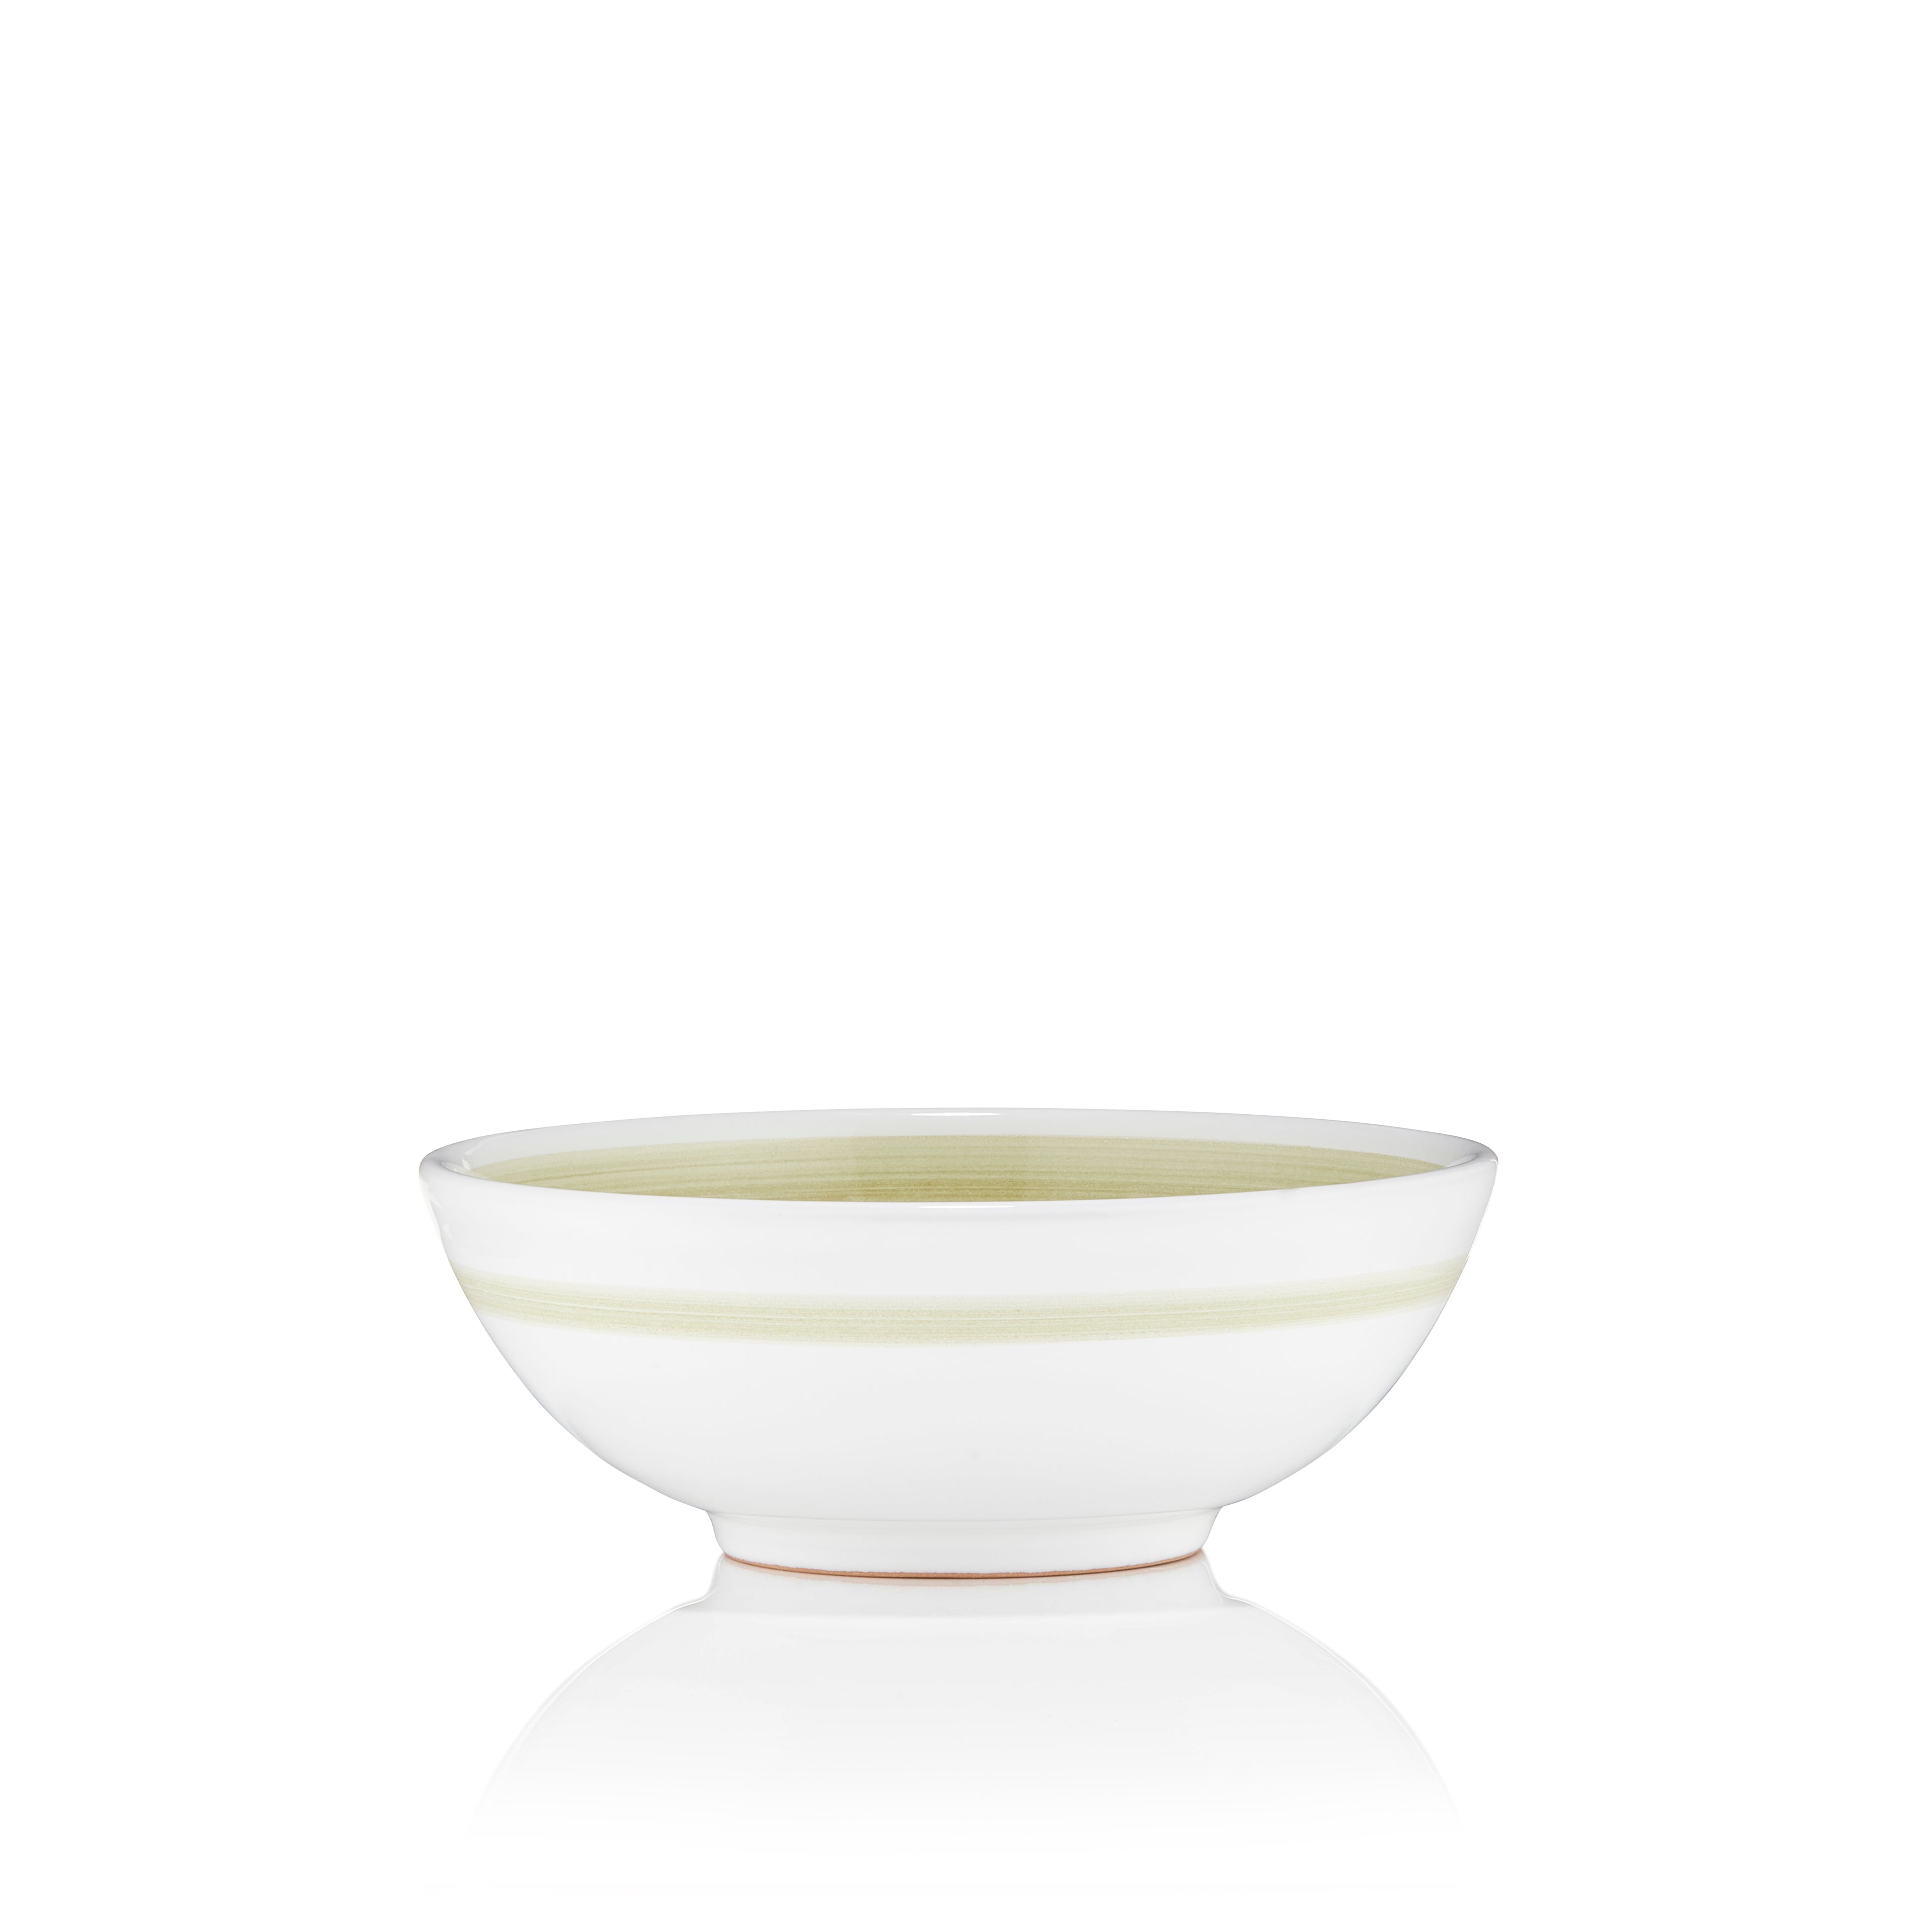 S&B 'Brushed' Ceramic Soup Bowl in Season Green, 16cm